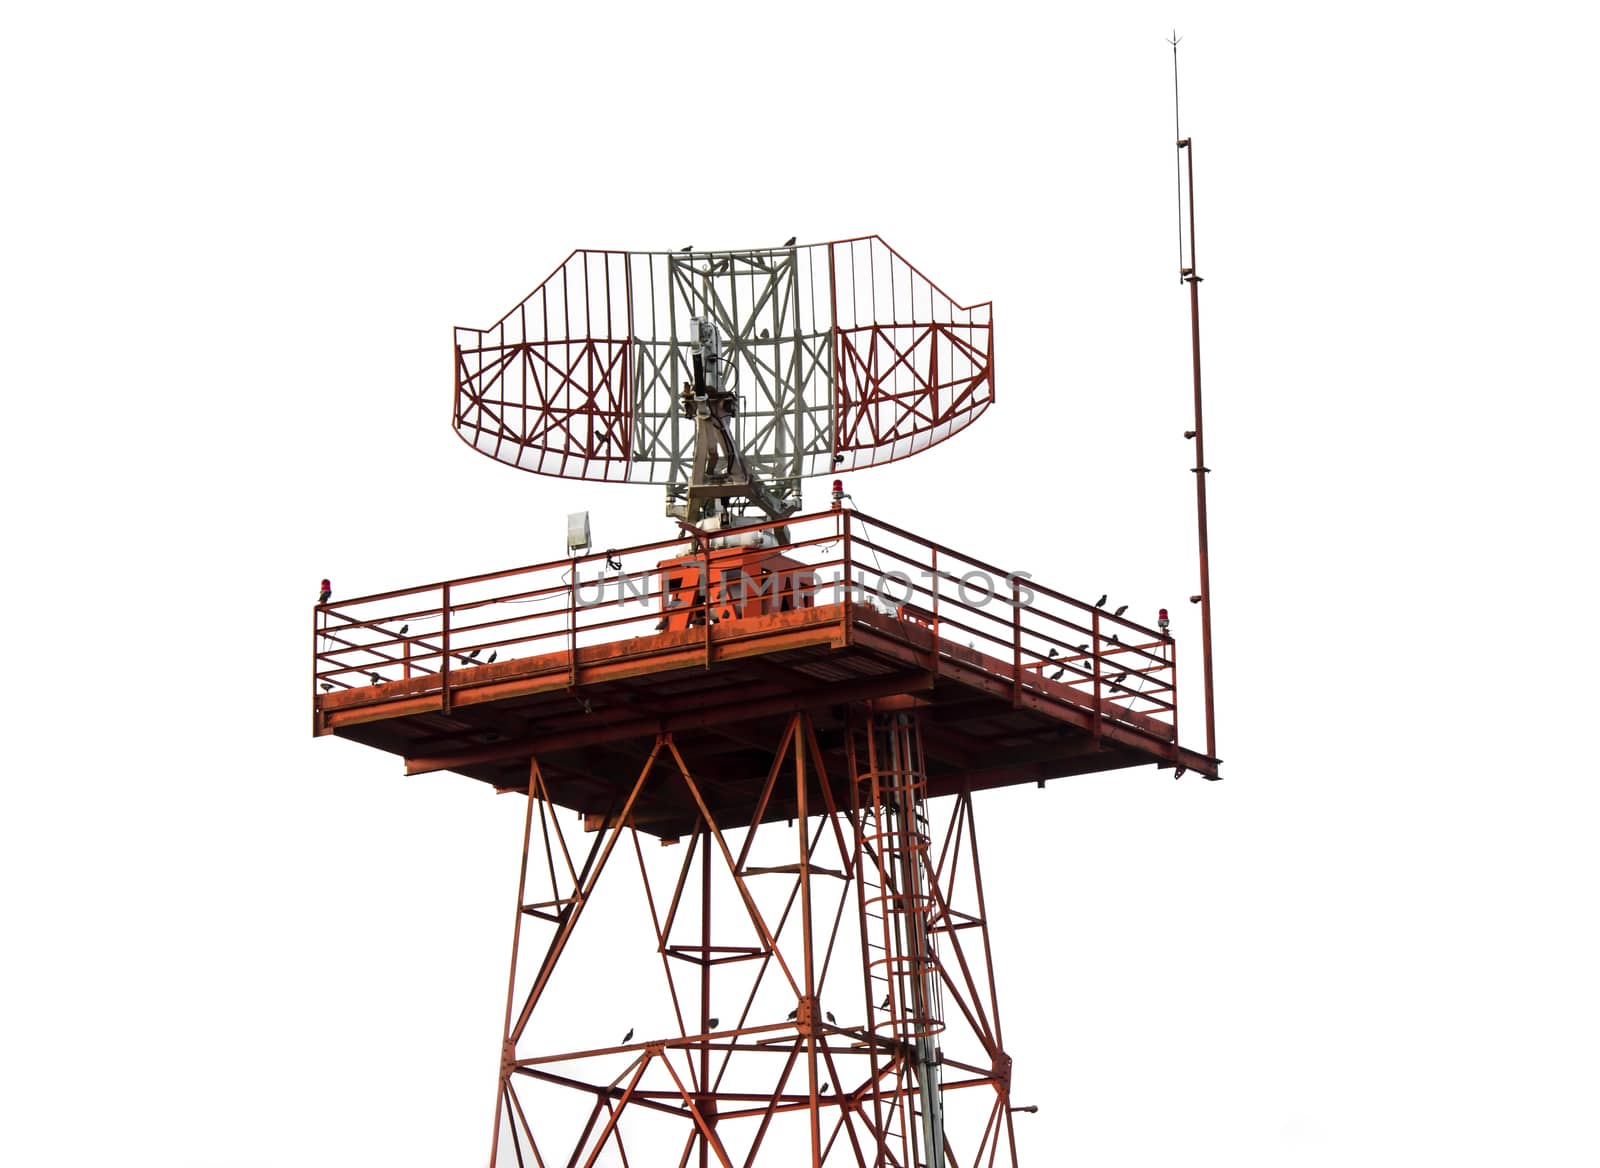  metal radar tower in airport area by shutterbird